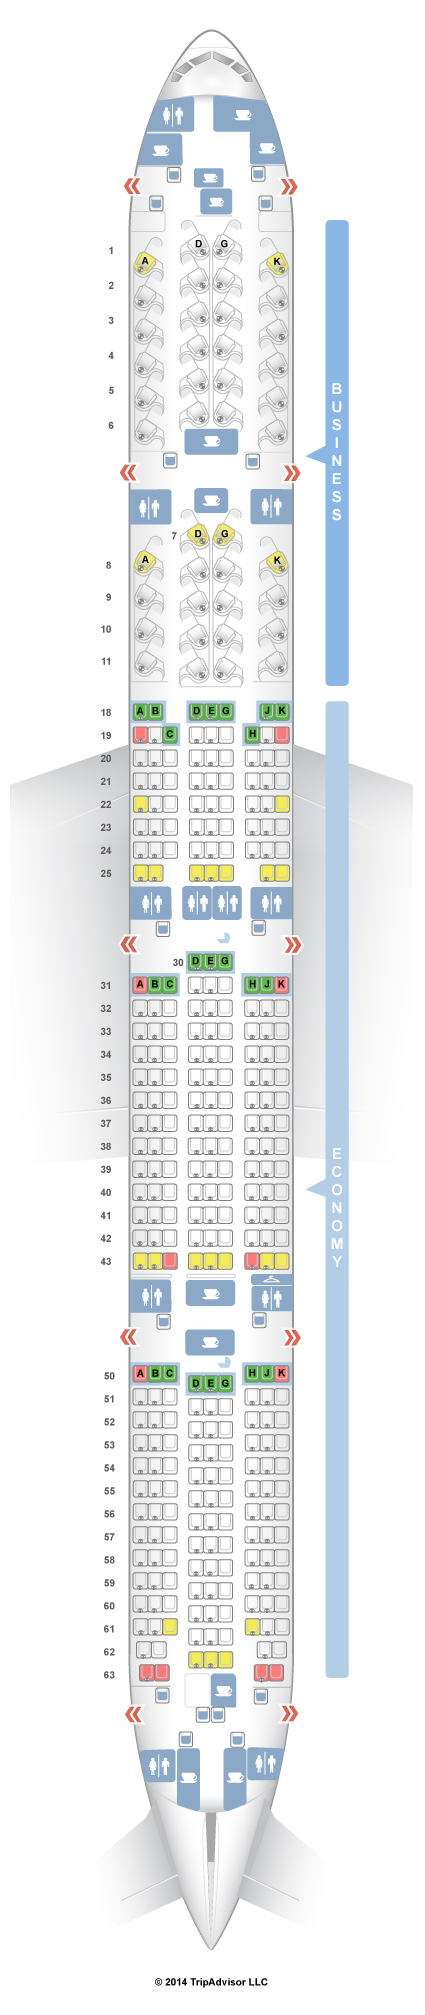 Air Canada Jazz Seating Chart